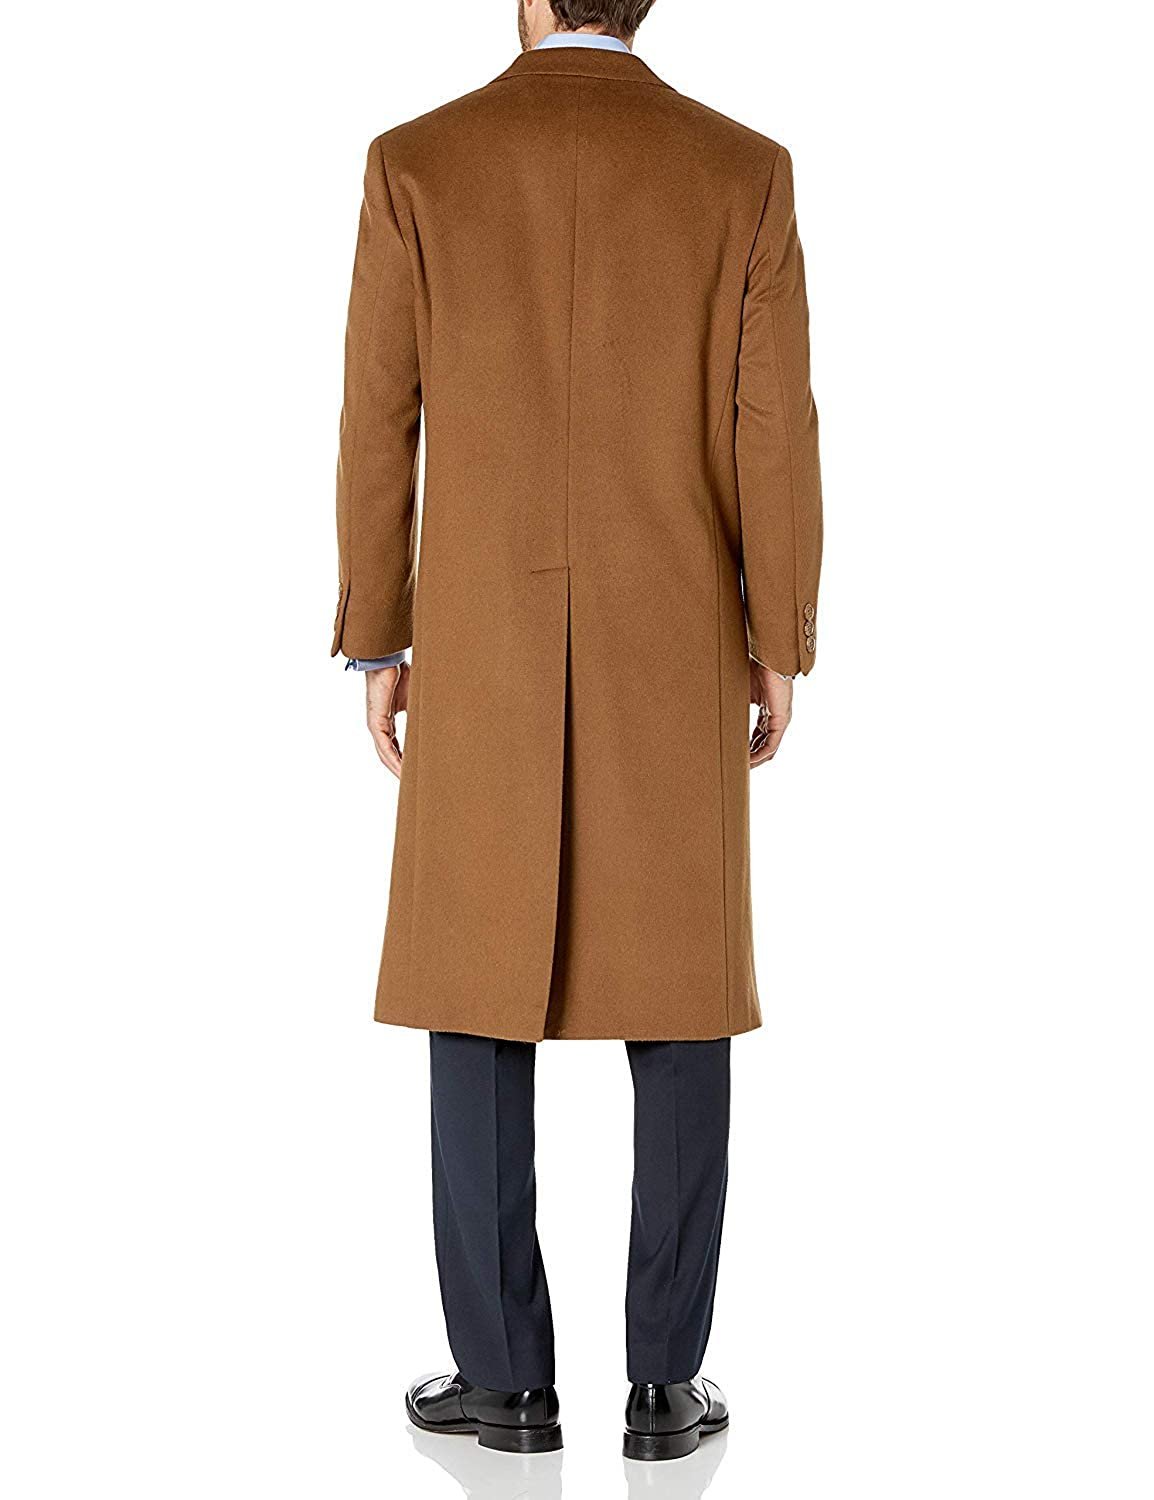 Men's Single Breasted Luxury Wool/Cashmere Full Length Topcoat | eBay